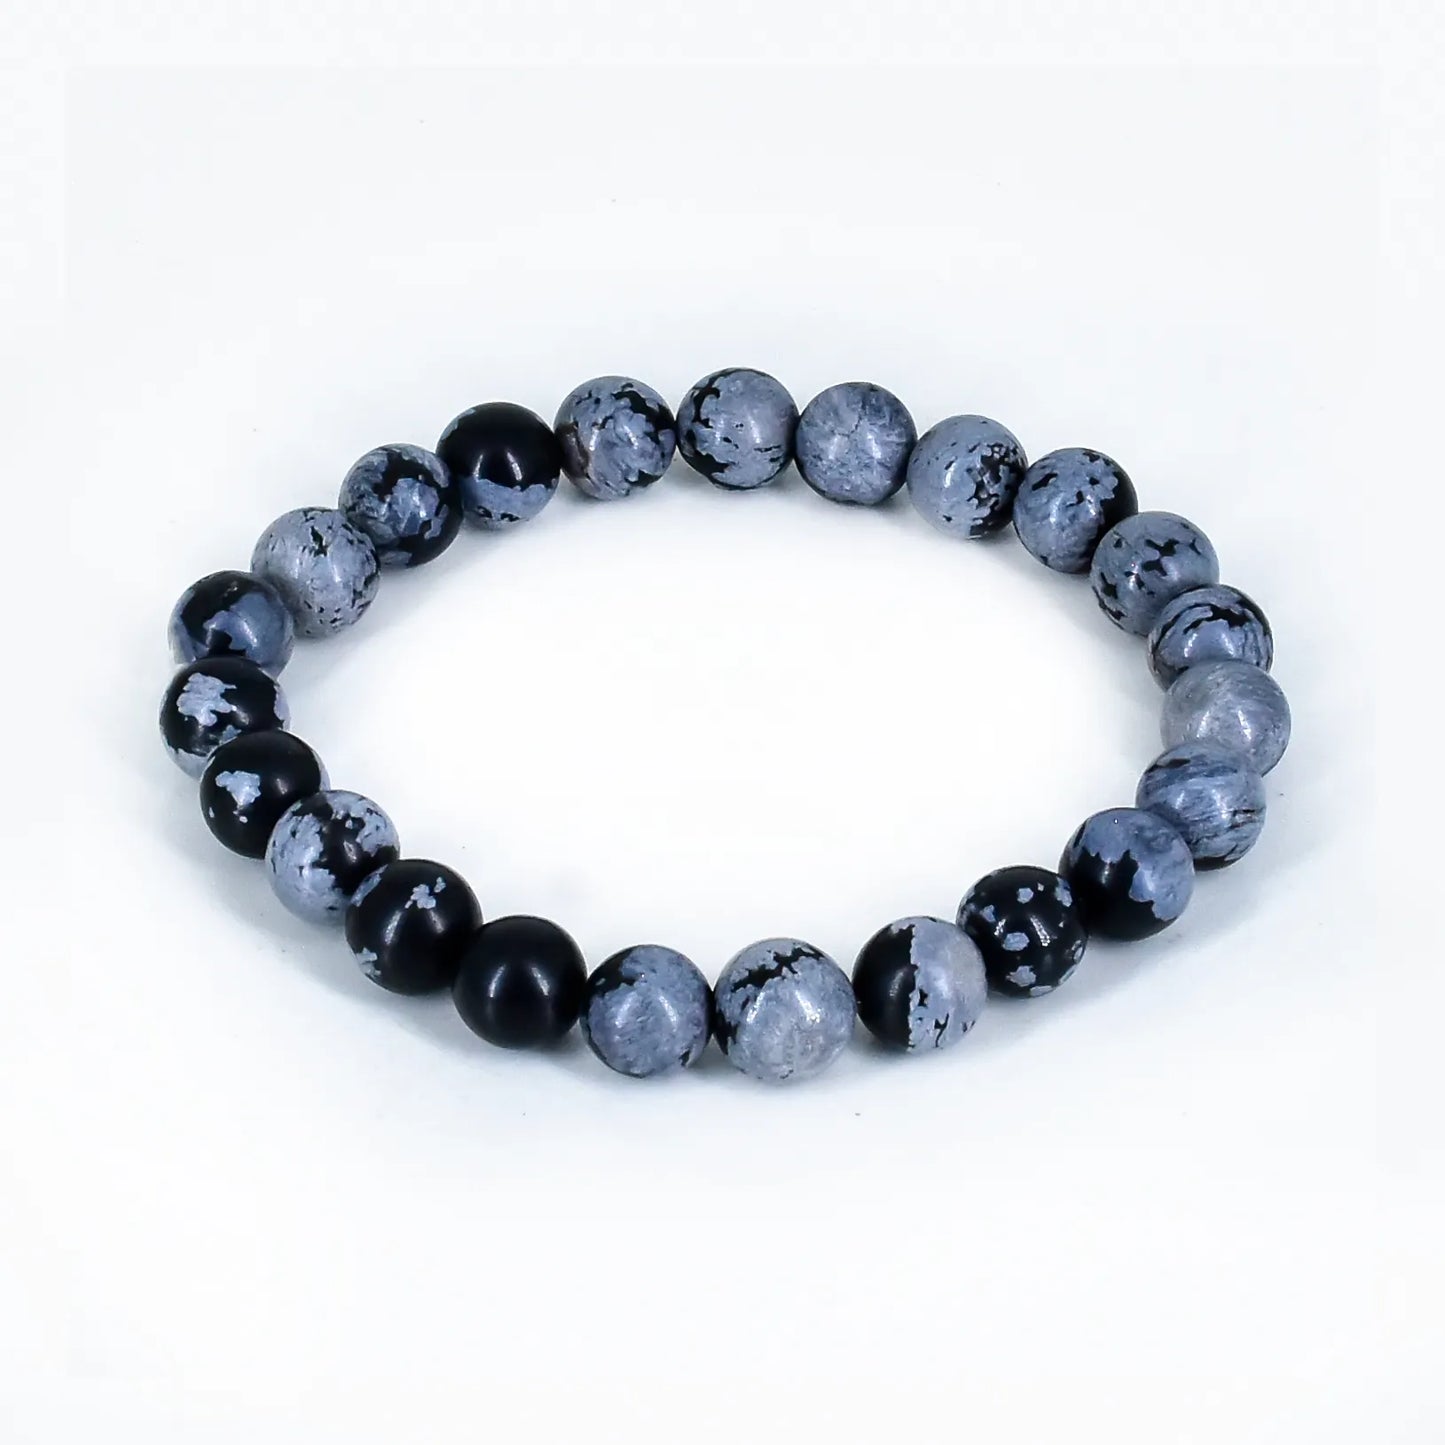 Snowflaxe Obsidian Crystal stone bracelet for Inner Transformation